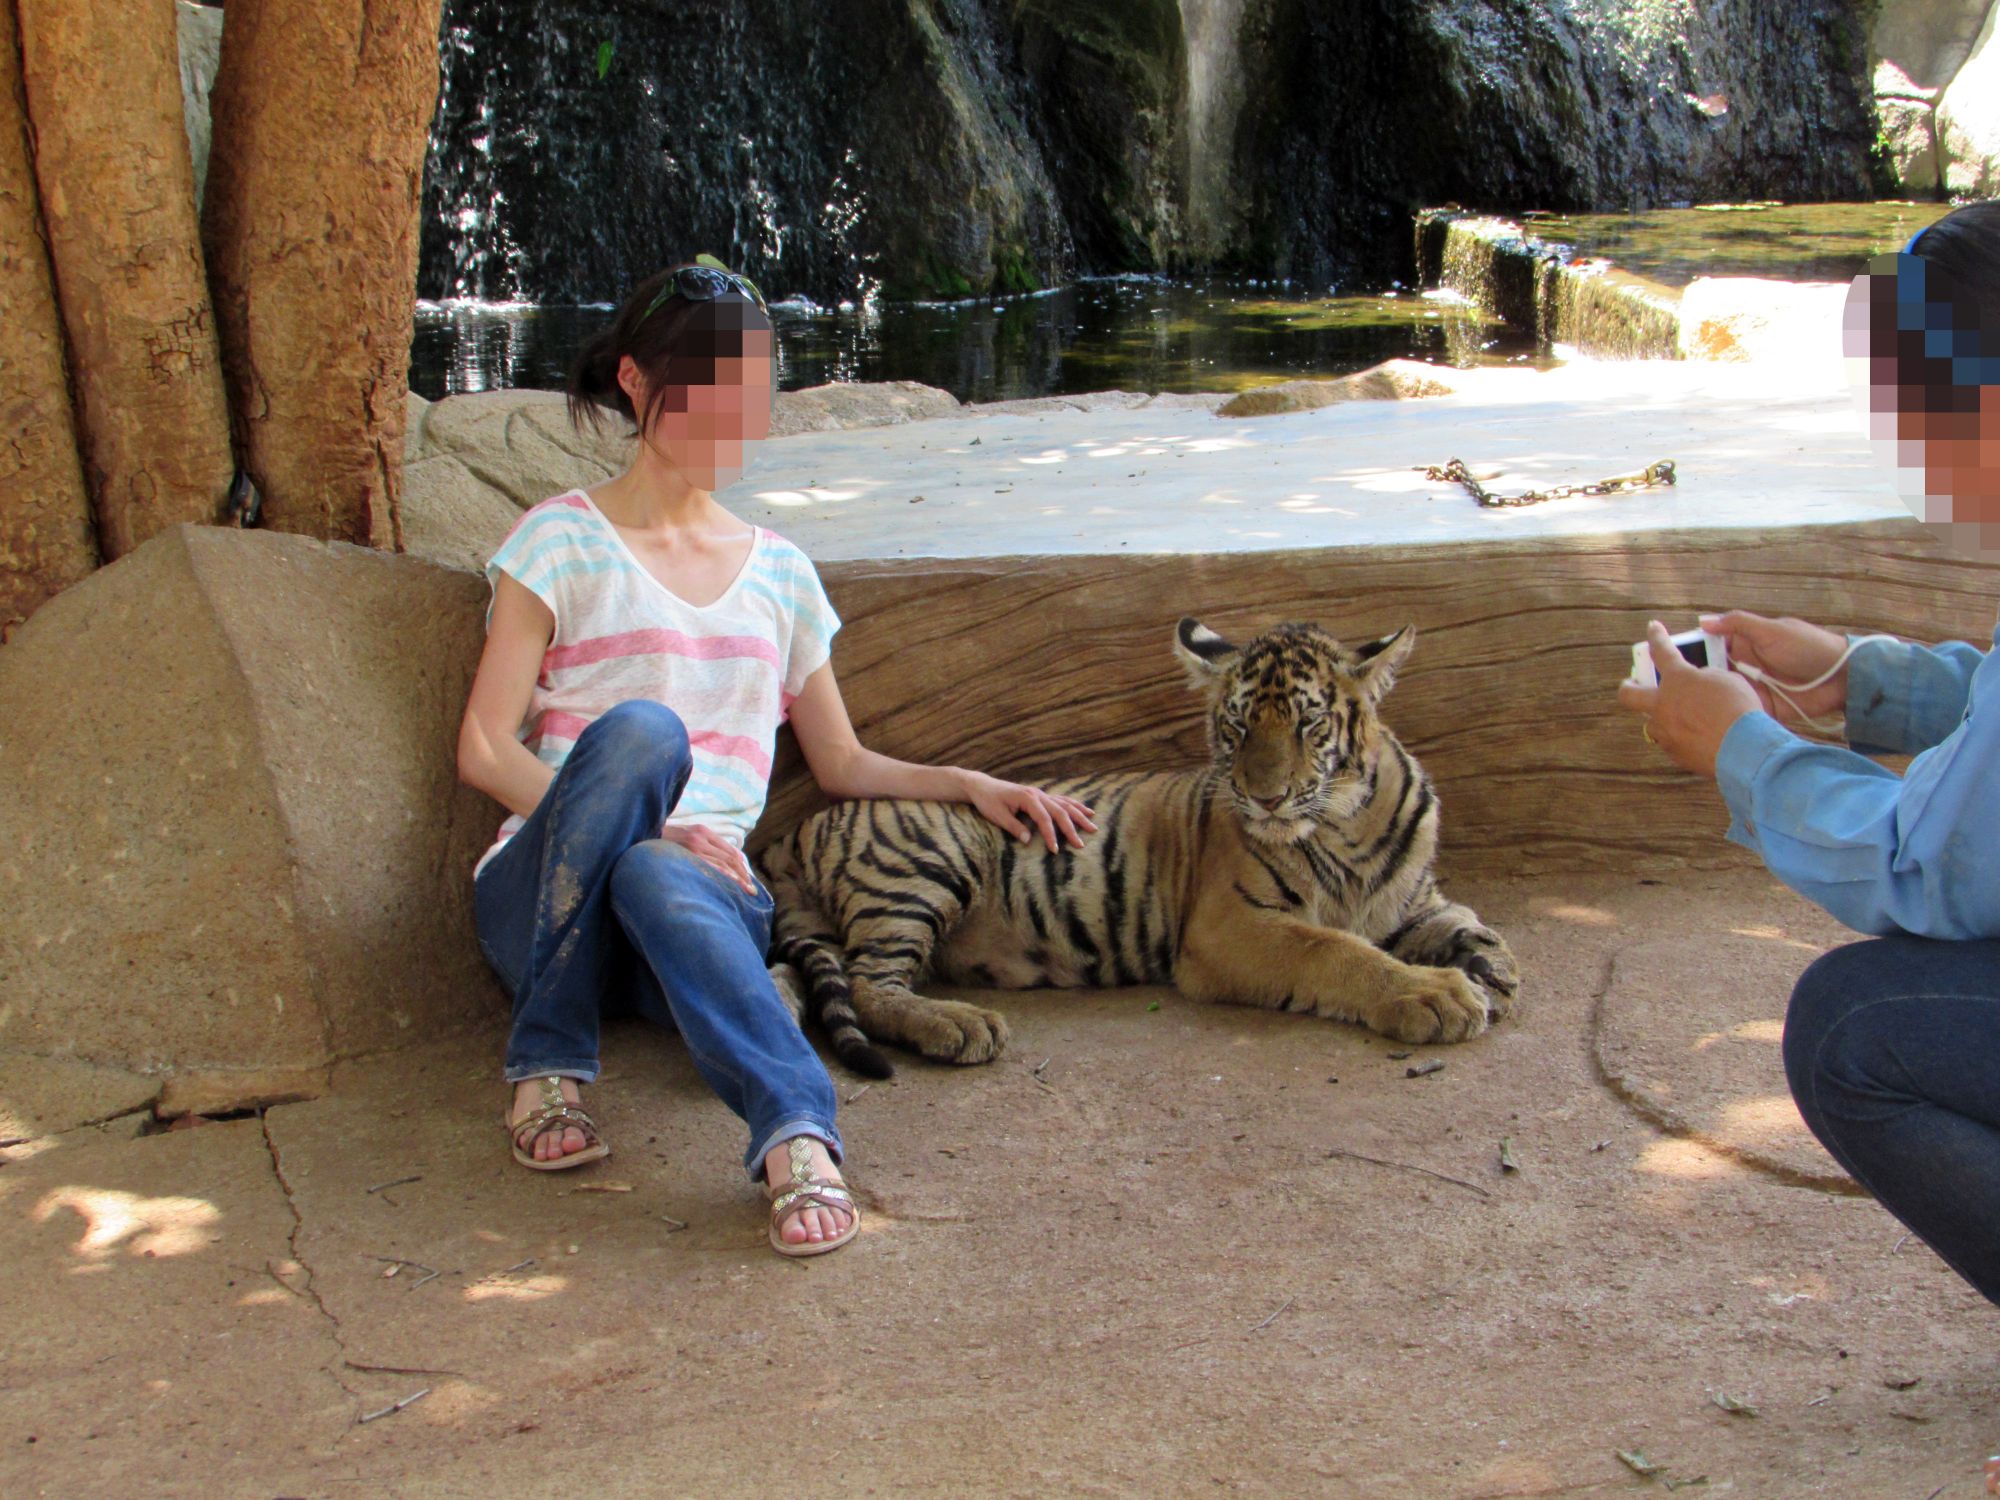 Una turista posa con una tigre cautivo en China.